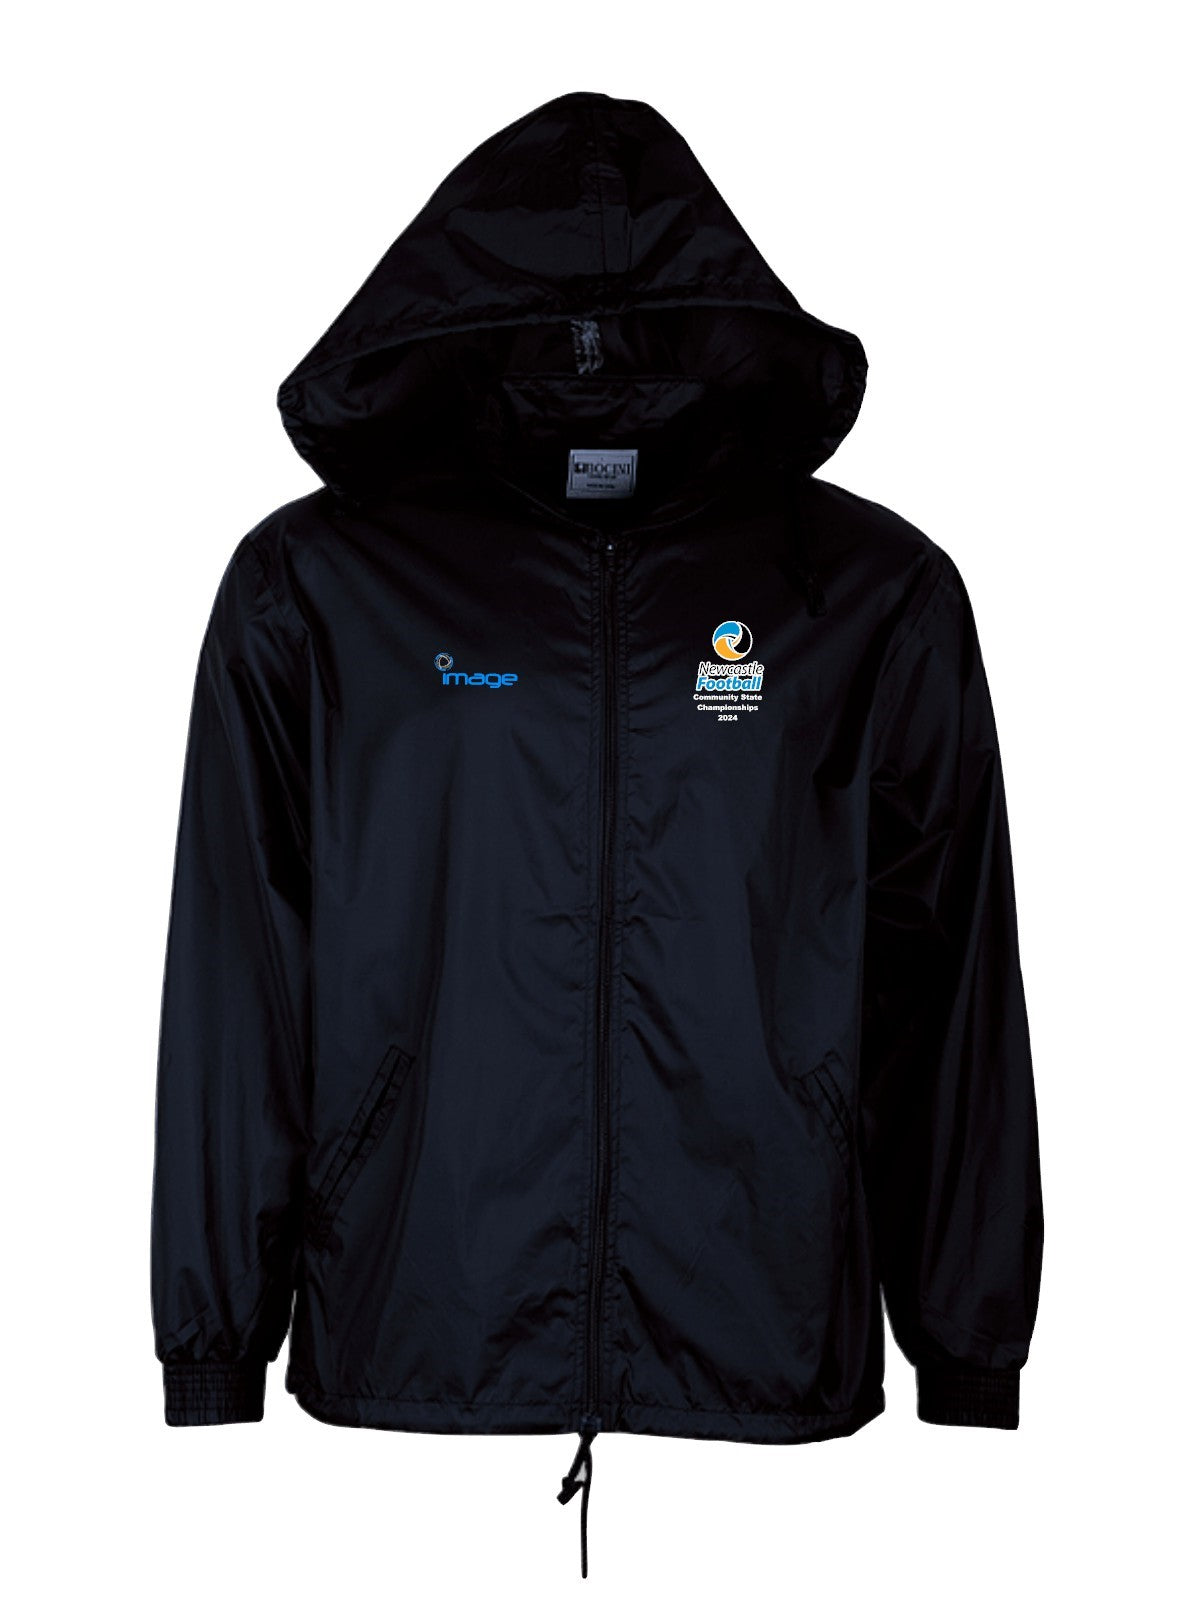 Newcastle Football Wet Weather Jacket - Adult